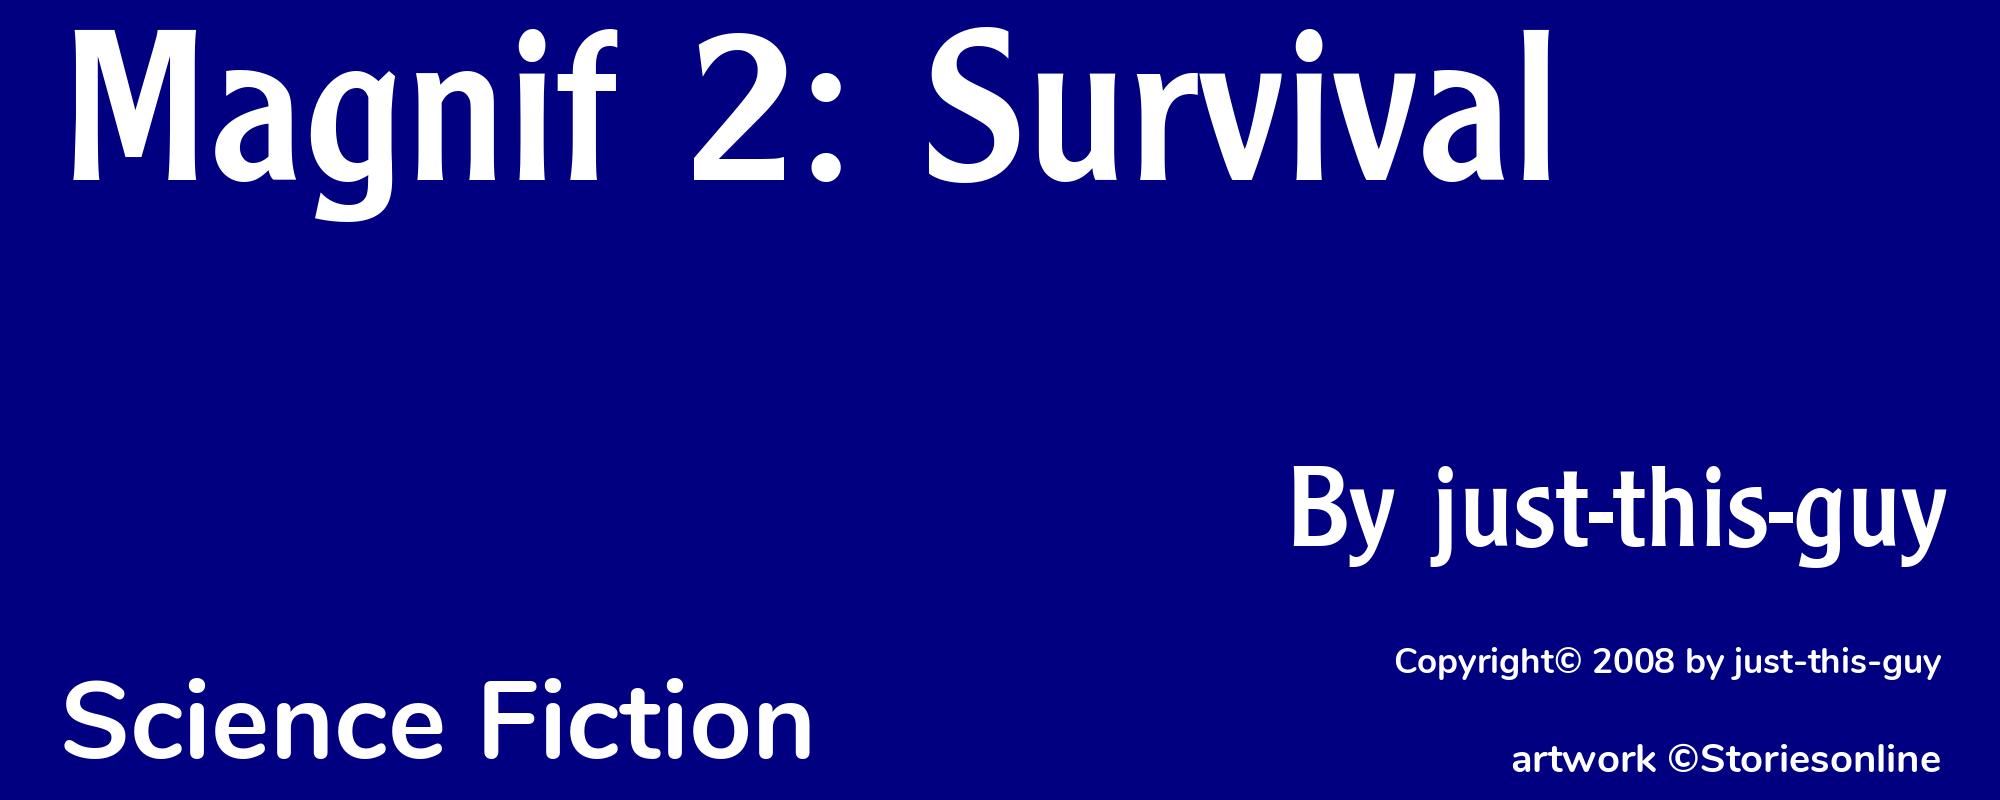 Magnif 2: Survival - Cover